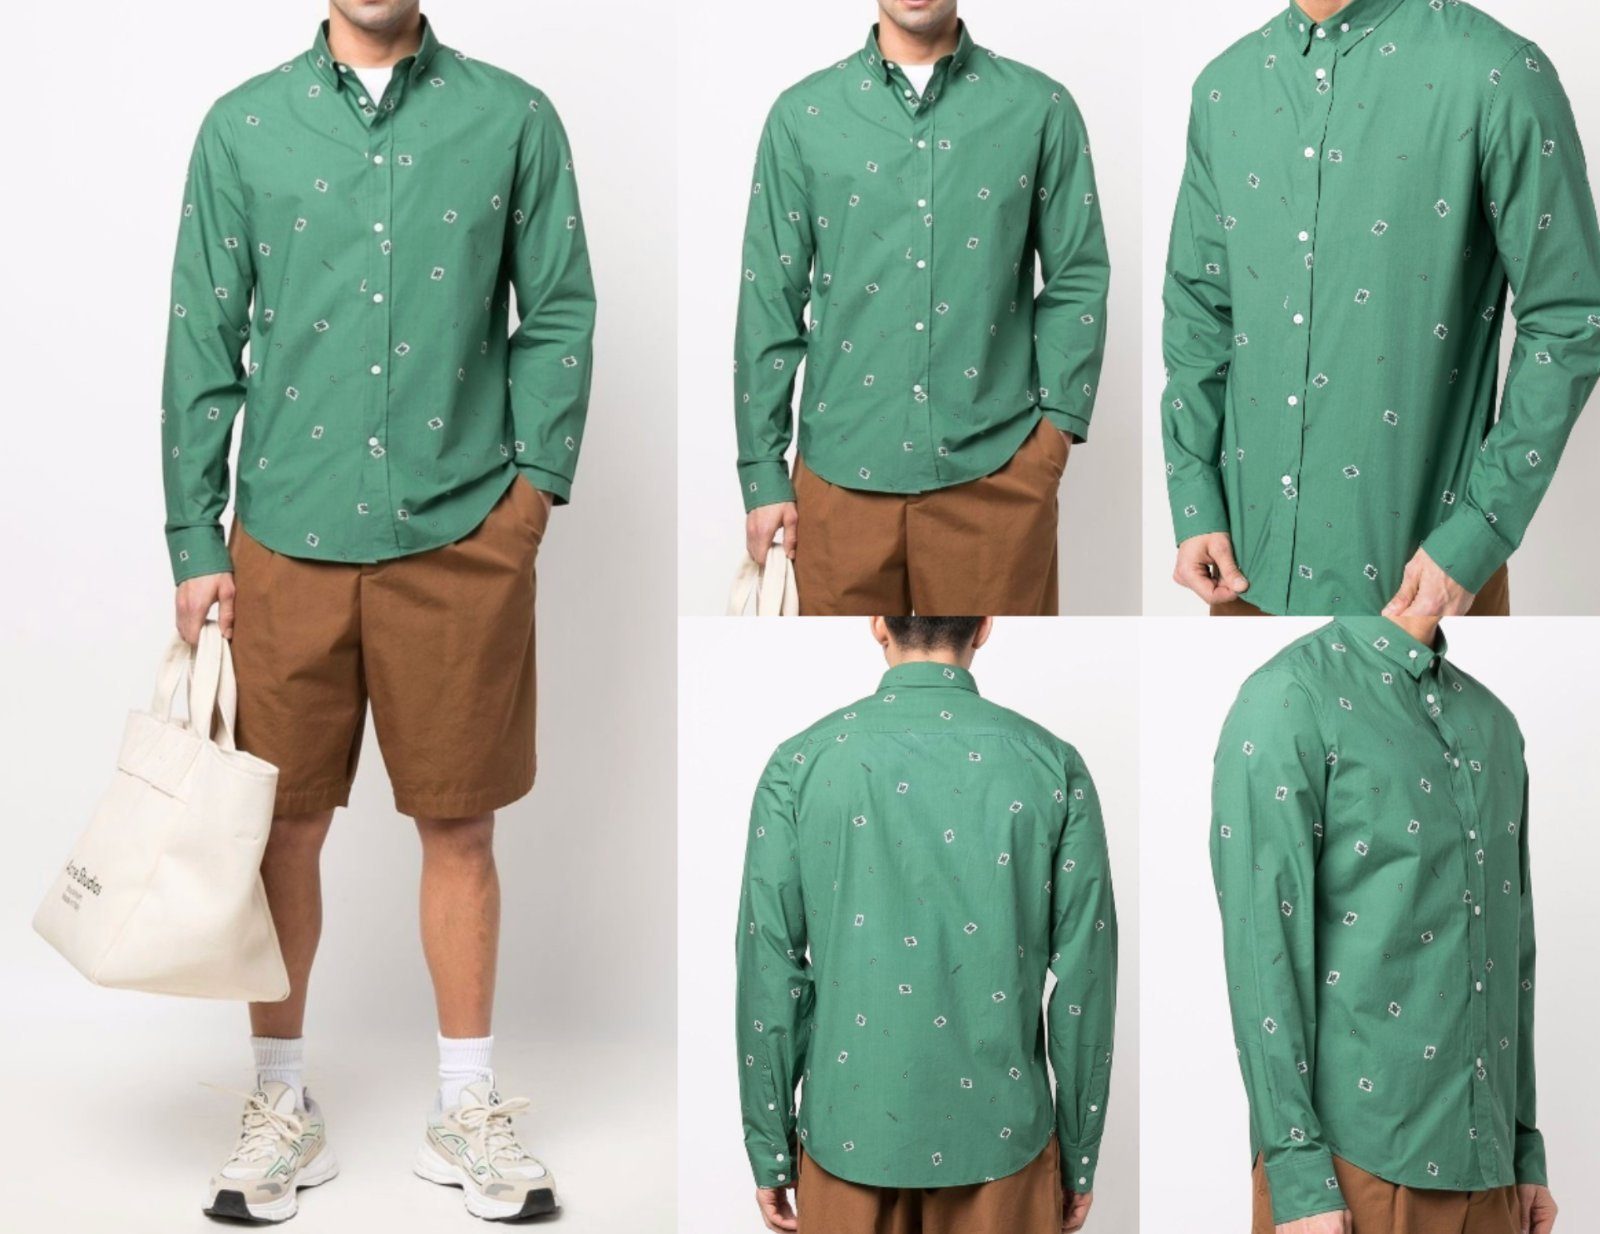 KENZO Langarmhemd KENZO Shirt Bandana Print Button-Down Hemd T-shirt Button-Down Herrenh